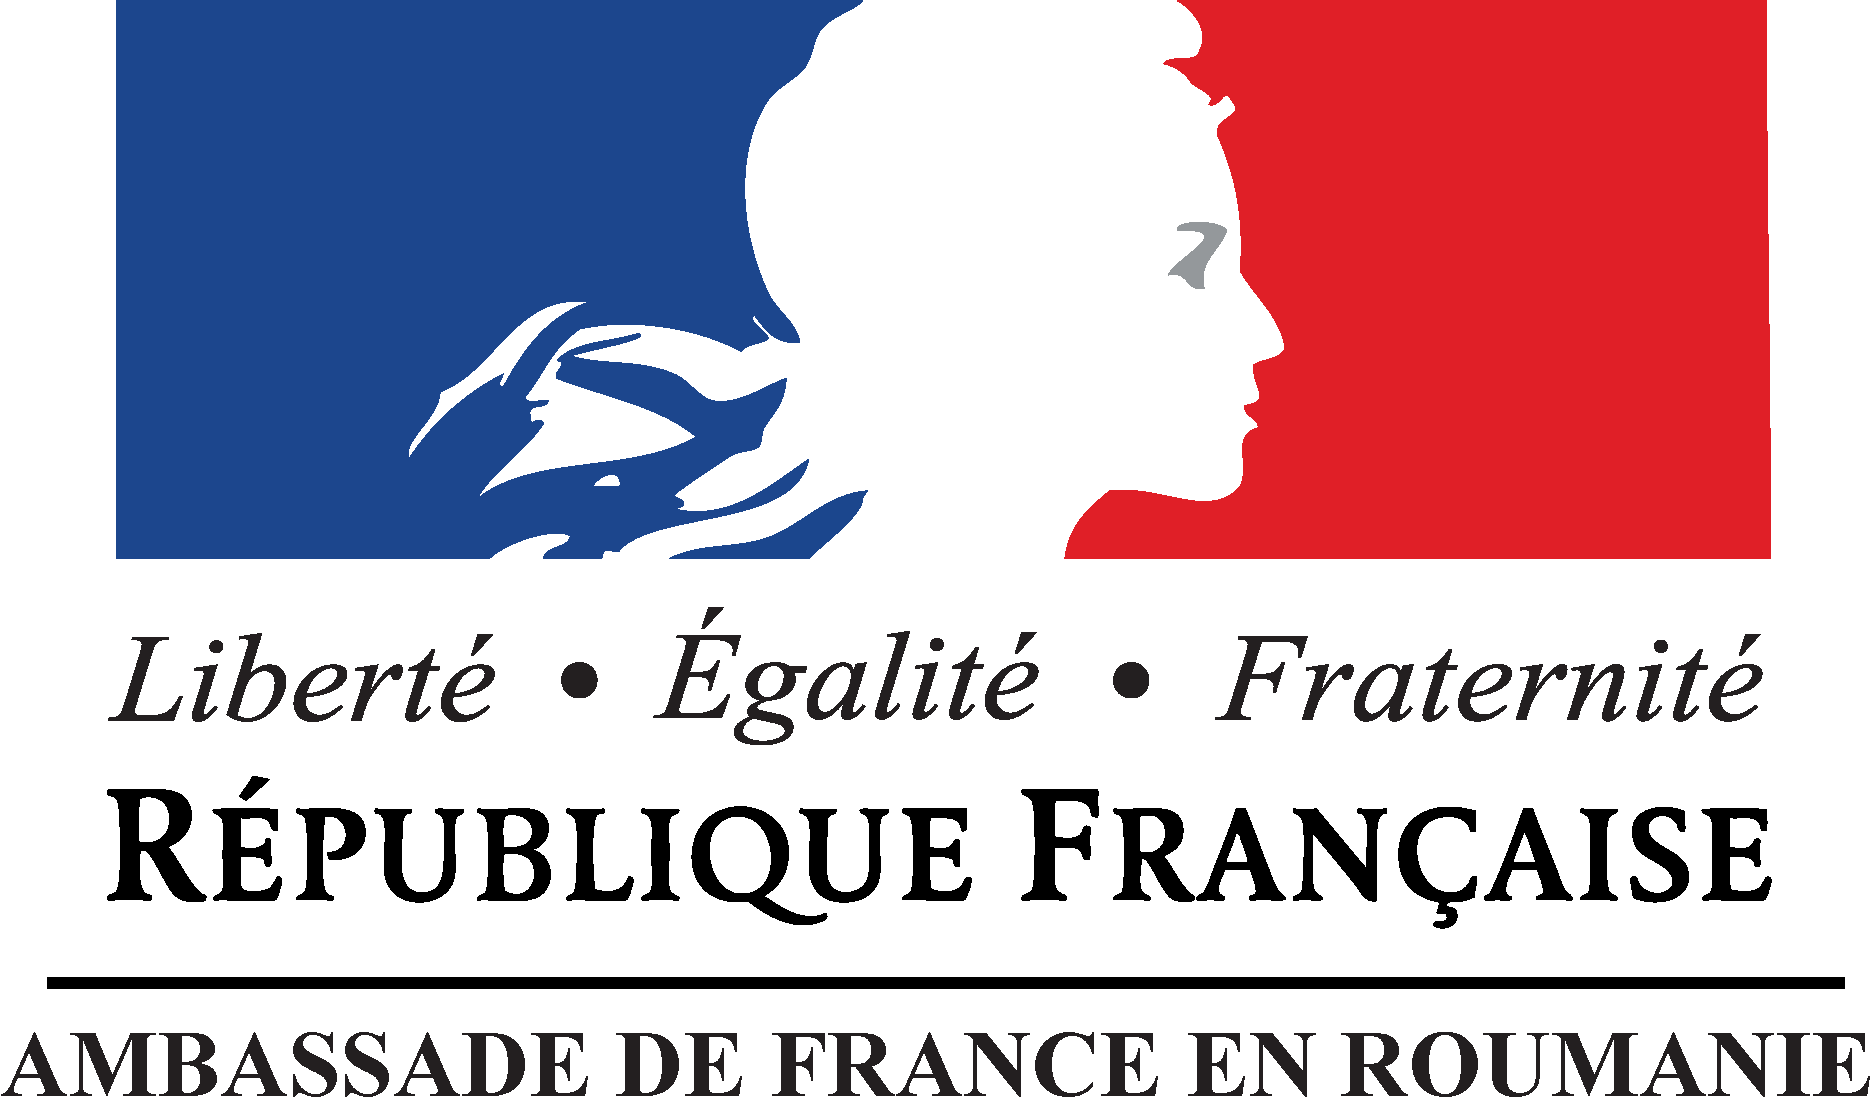 Ambassade de France en Roumanie Logo Vector - (.Ai .PNG .SVG .EPS Free ...